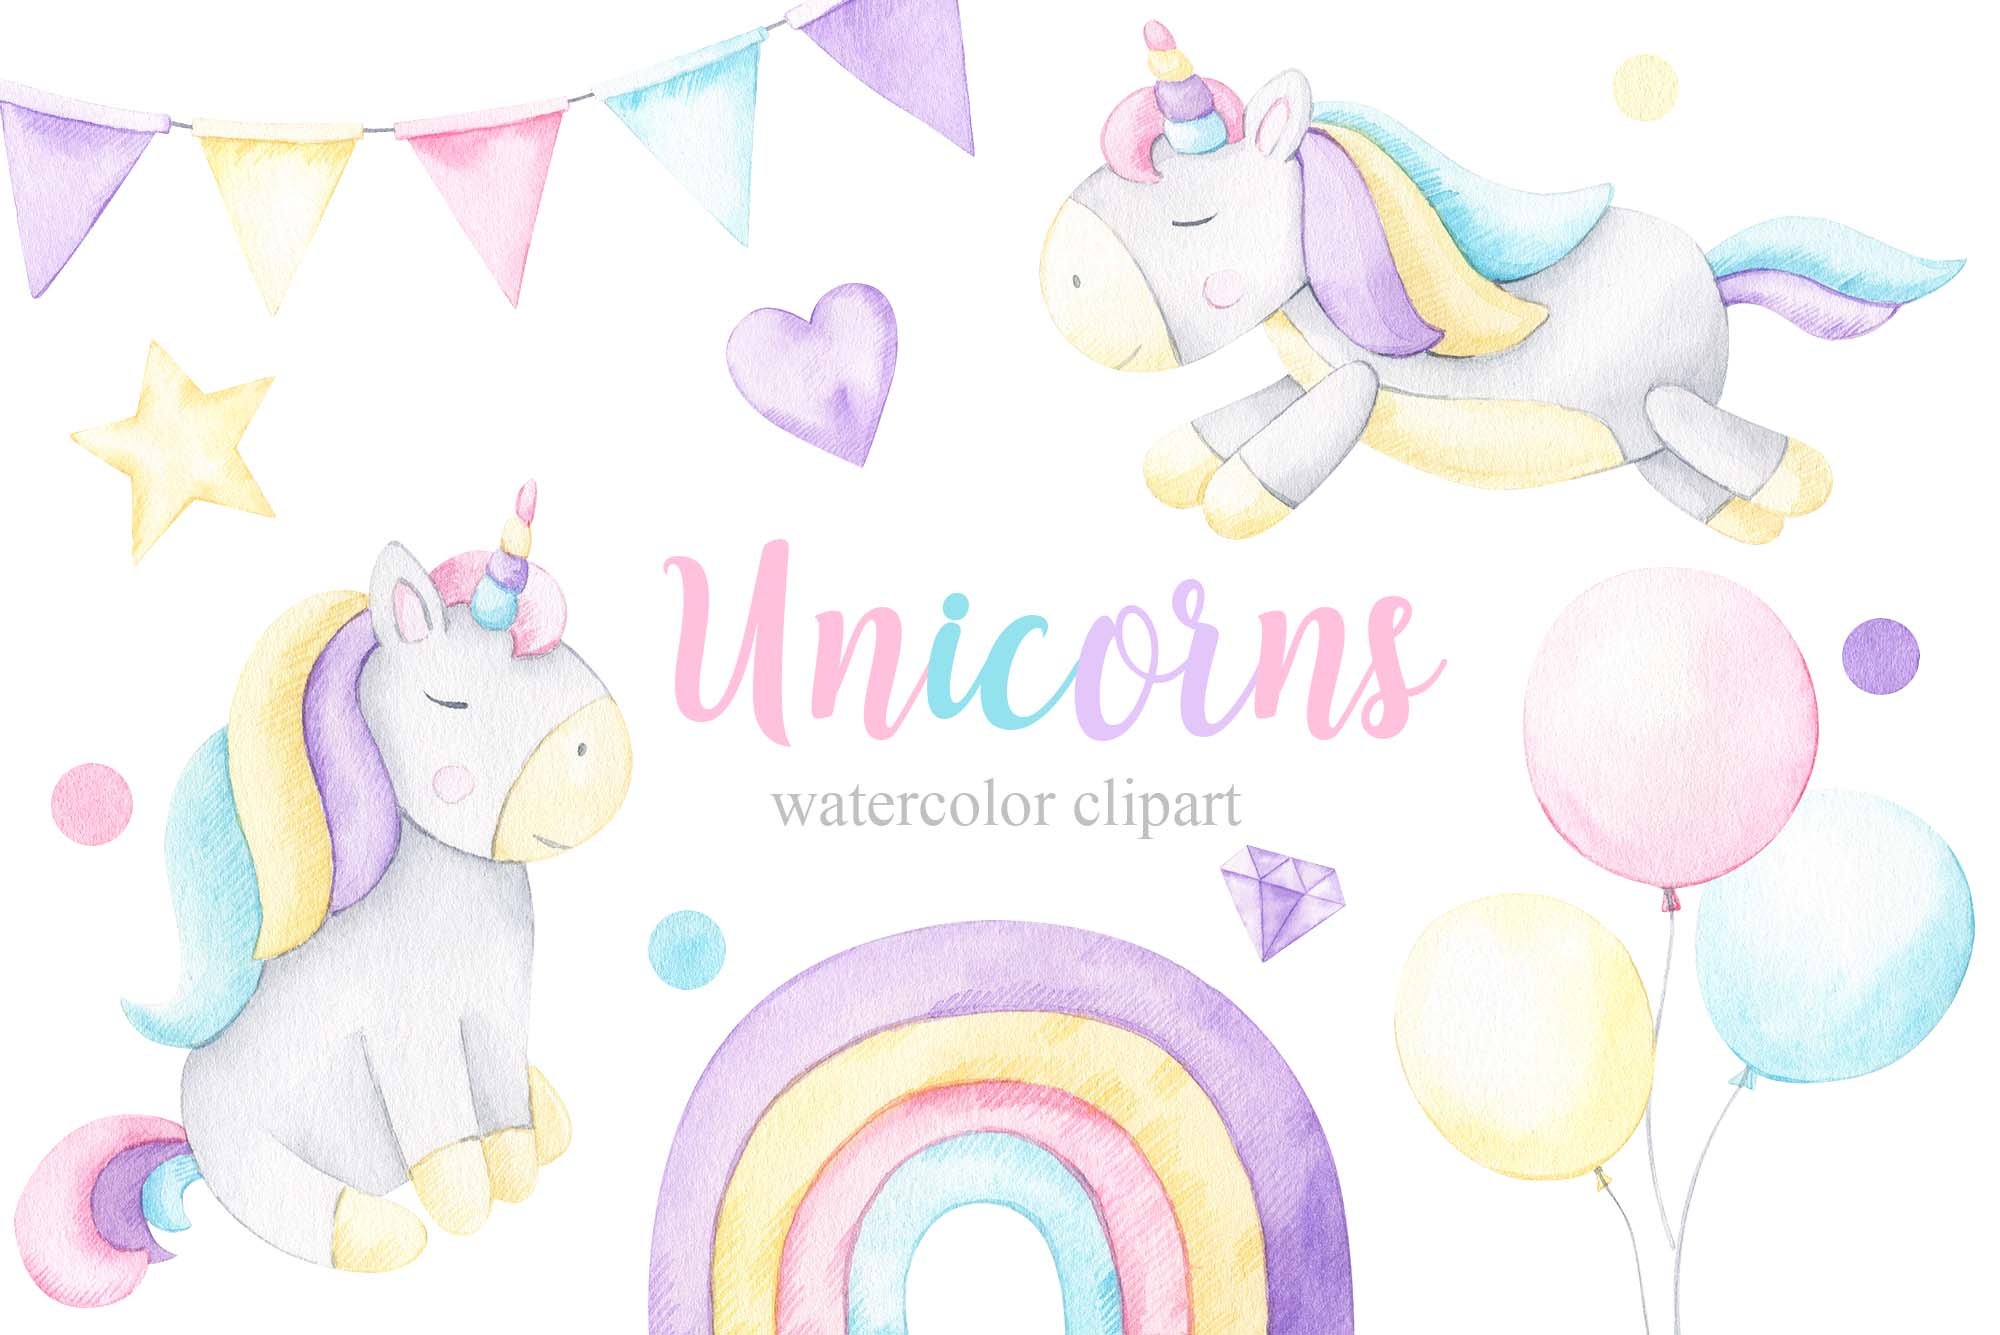 Unicorns - Watercolor Set cover image.